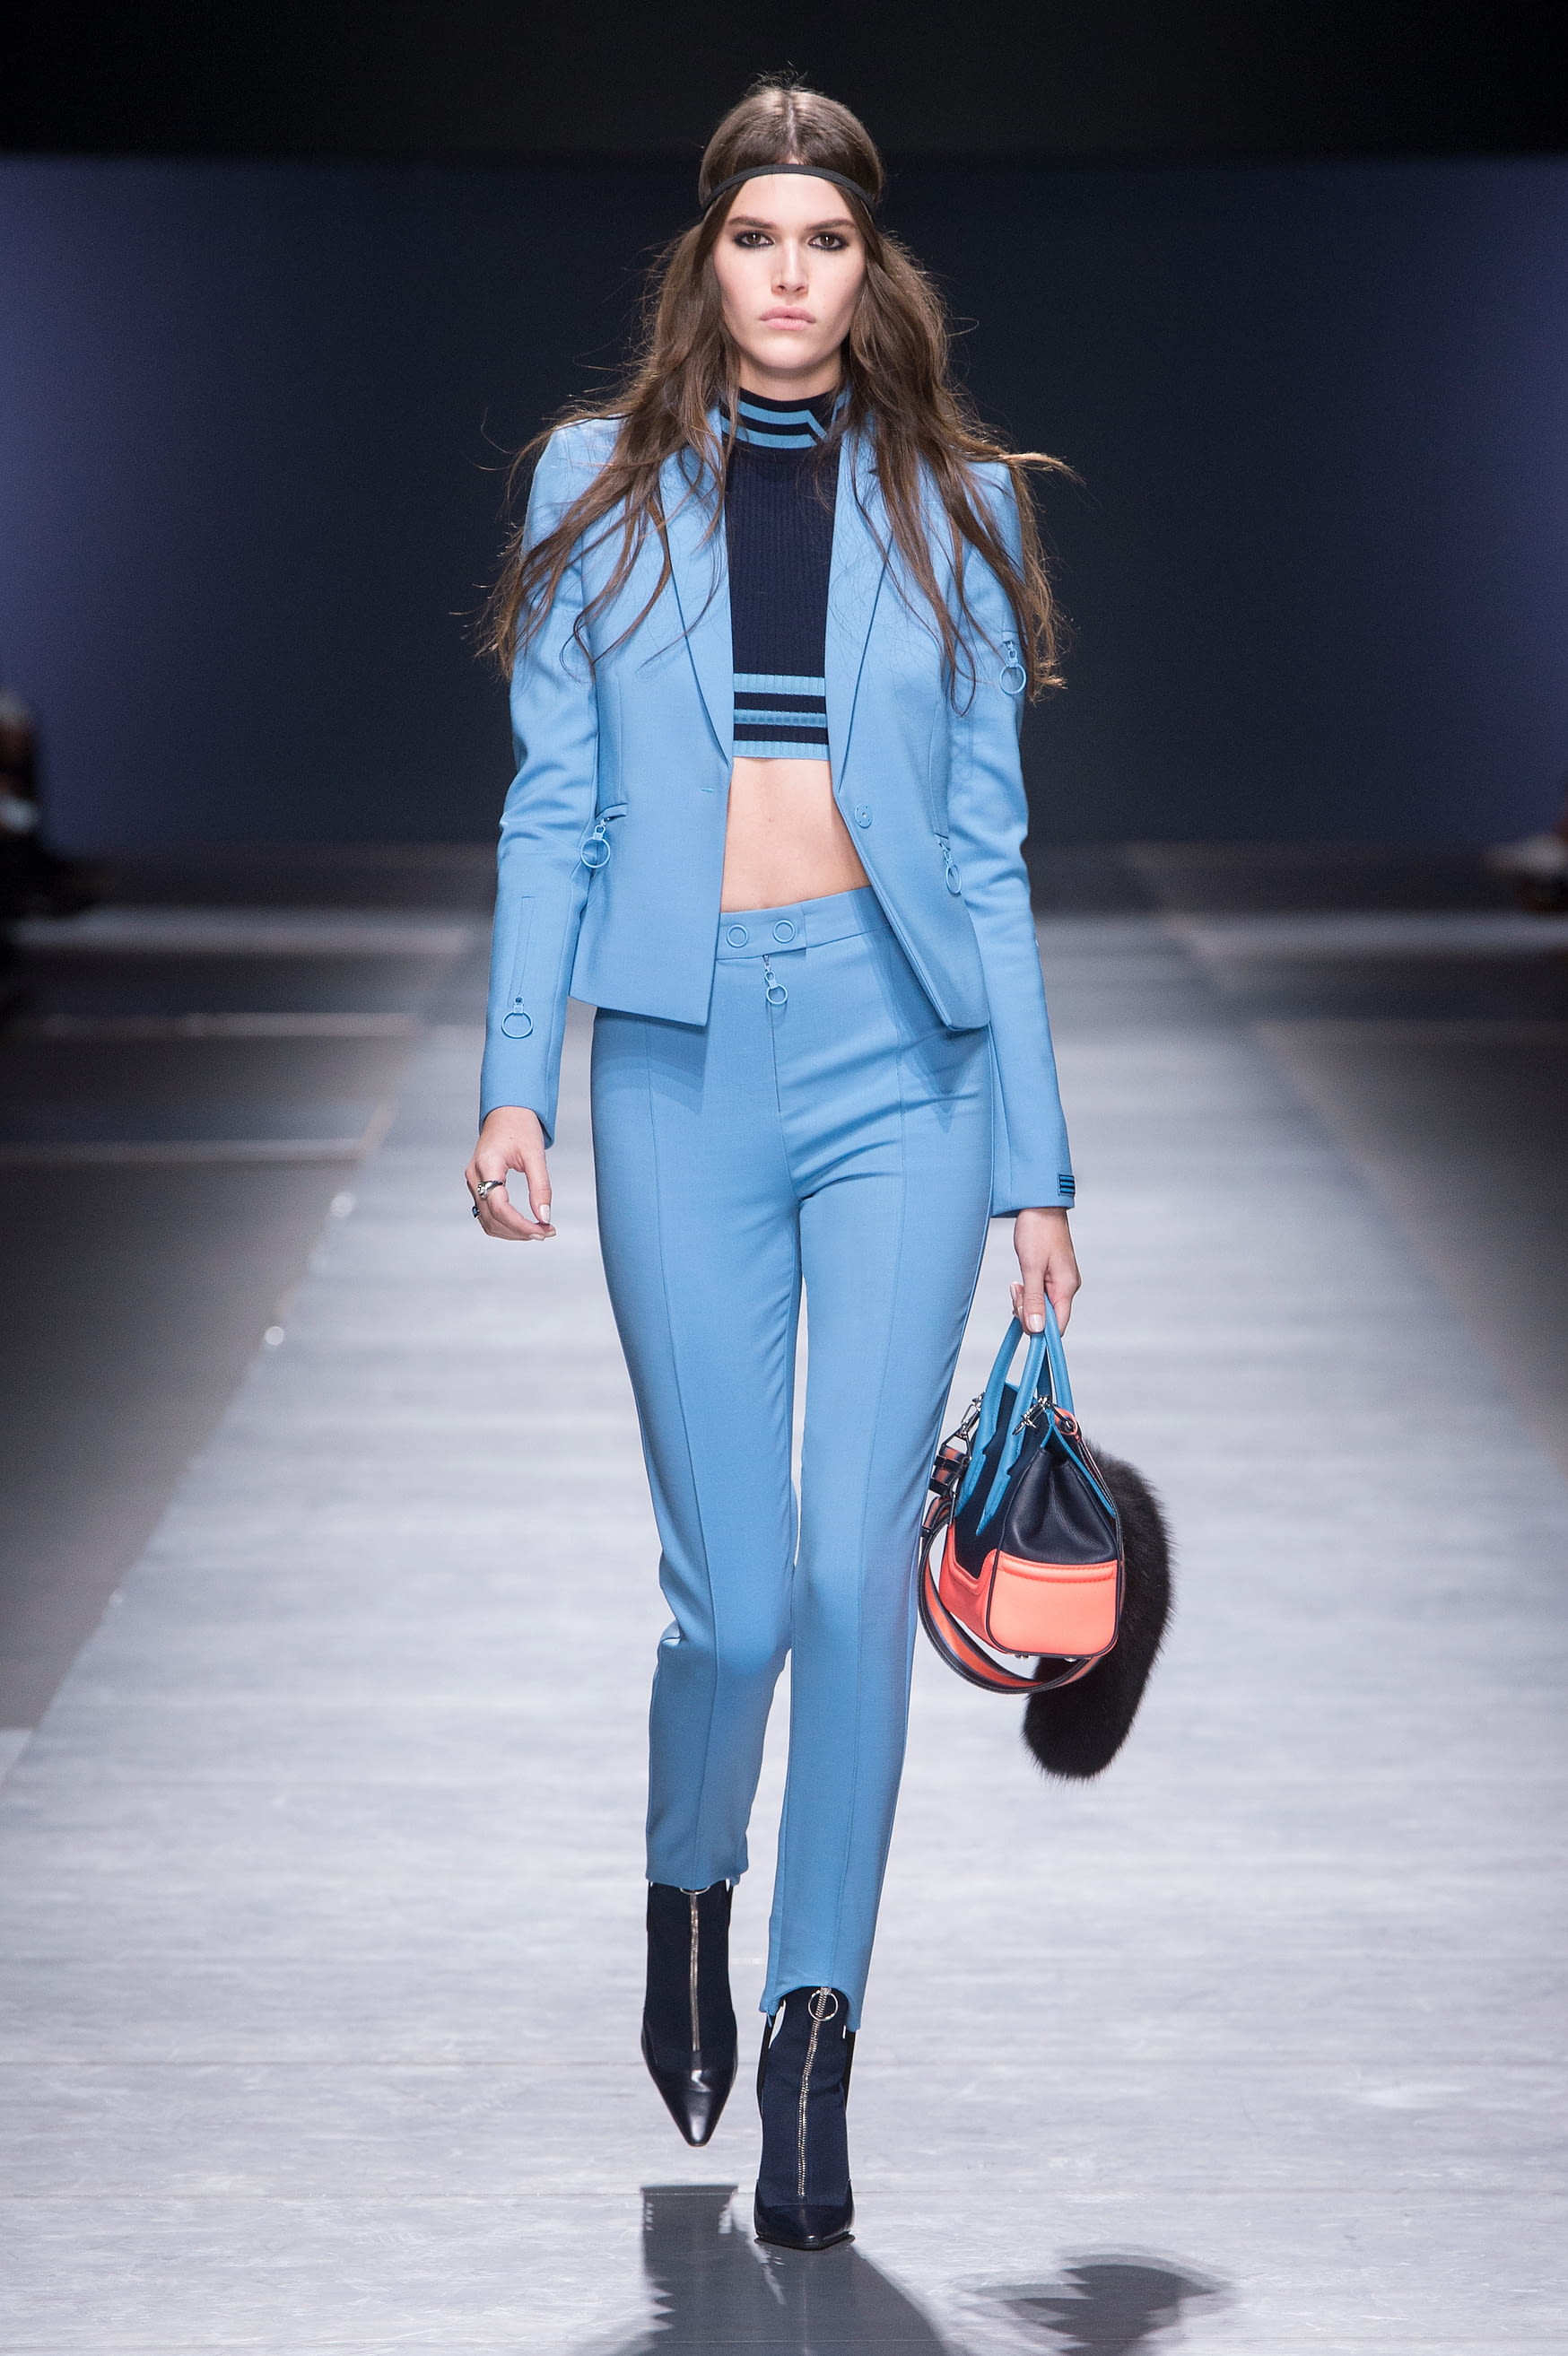 Reviewing Gigi Hadid's Handbag Collection  Chanel, Versace, Hermes,  Valentino, JW Pei and more 